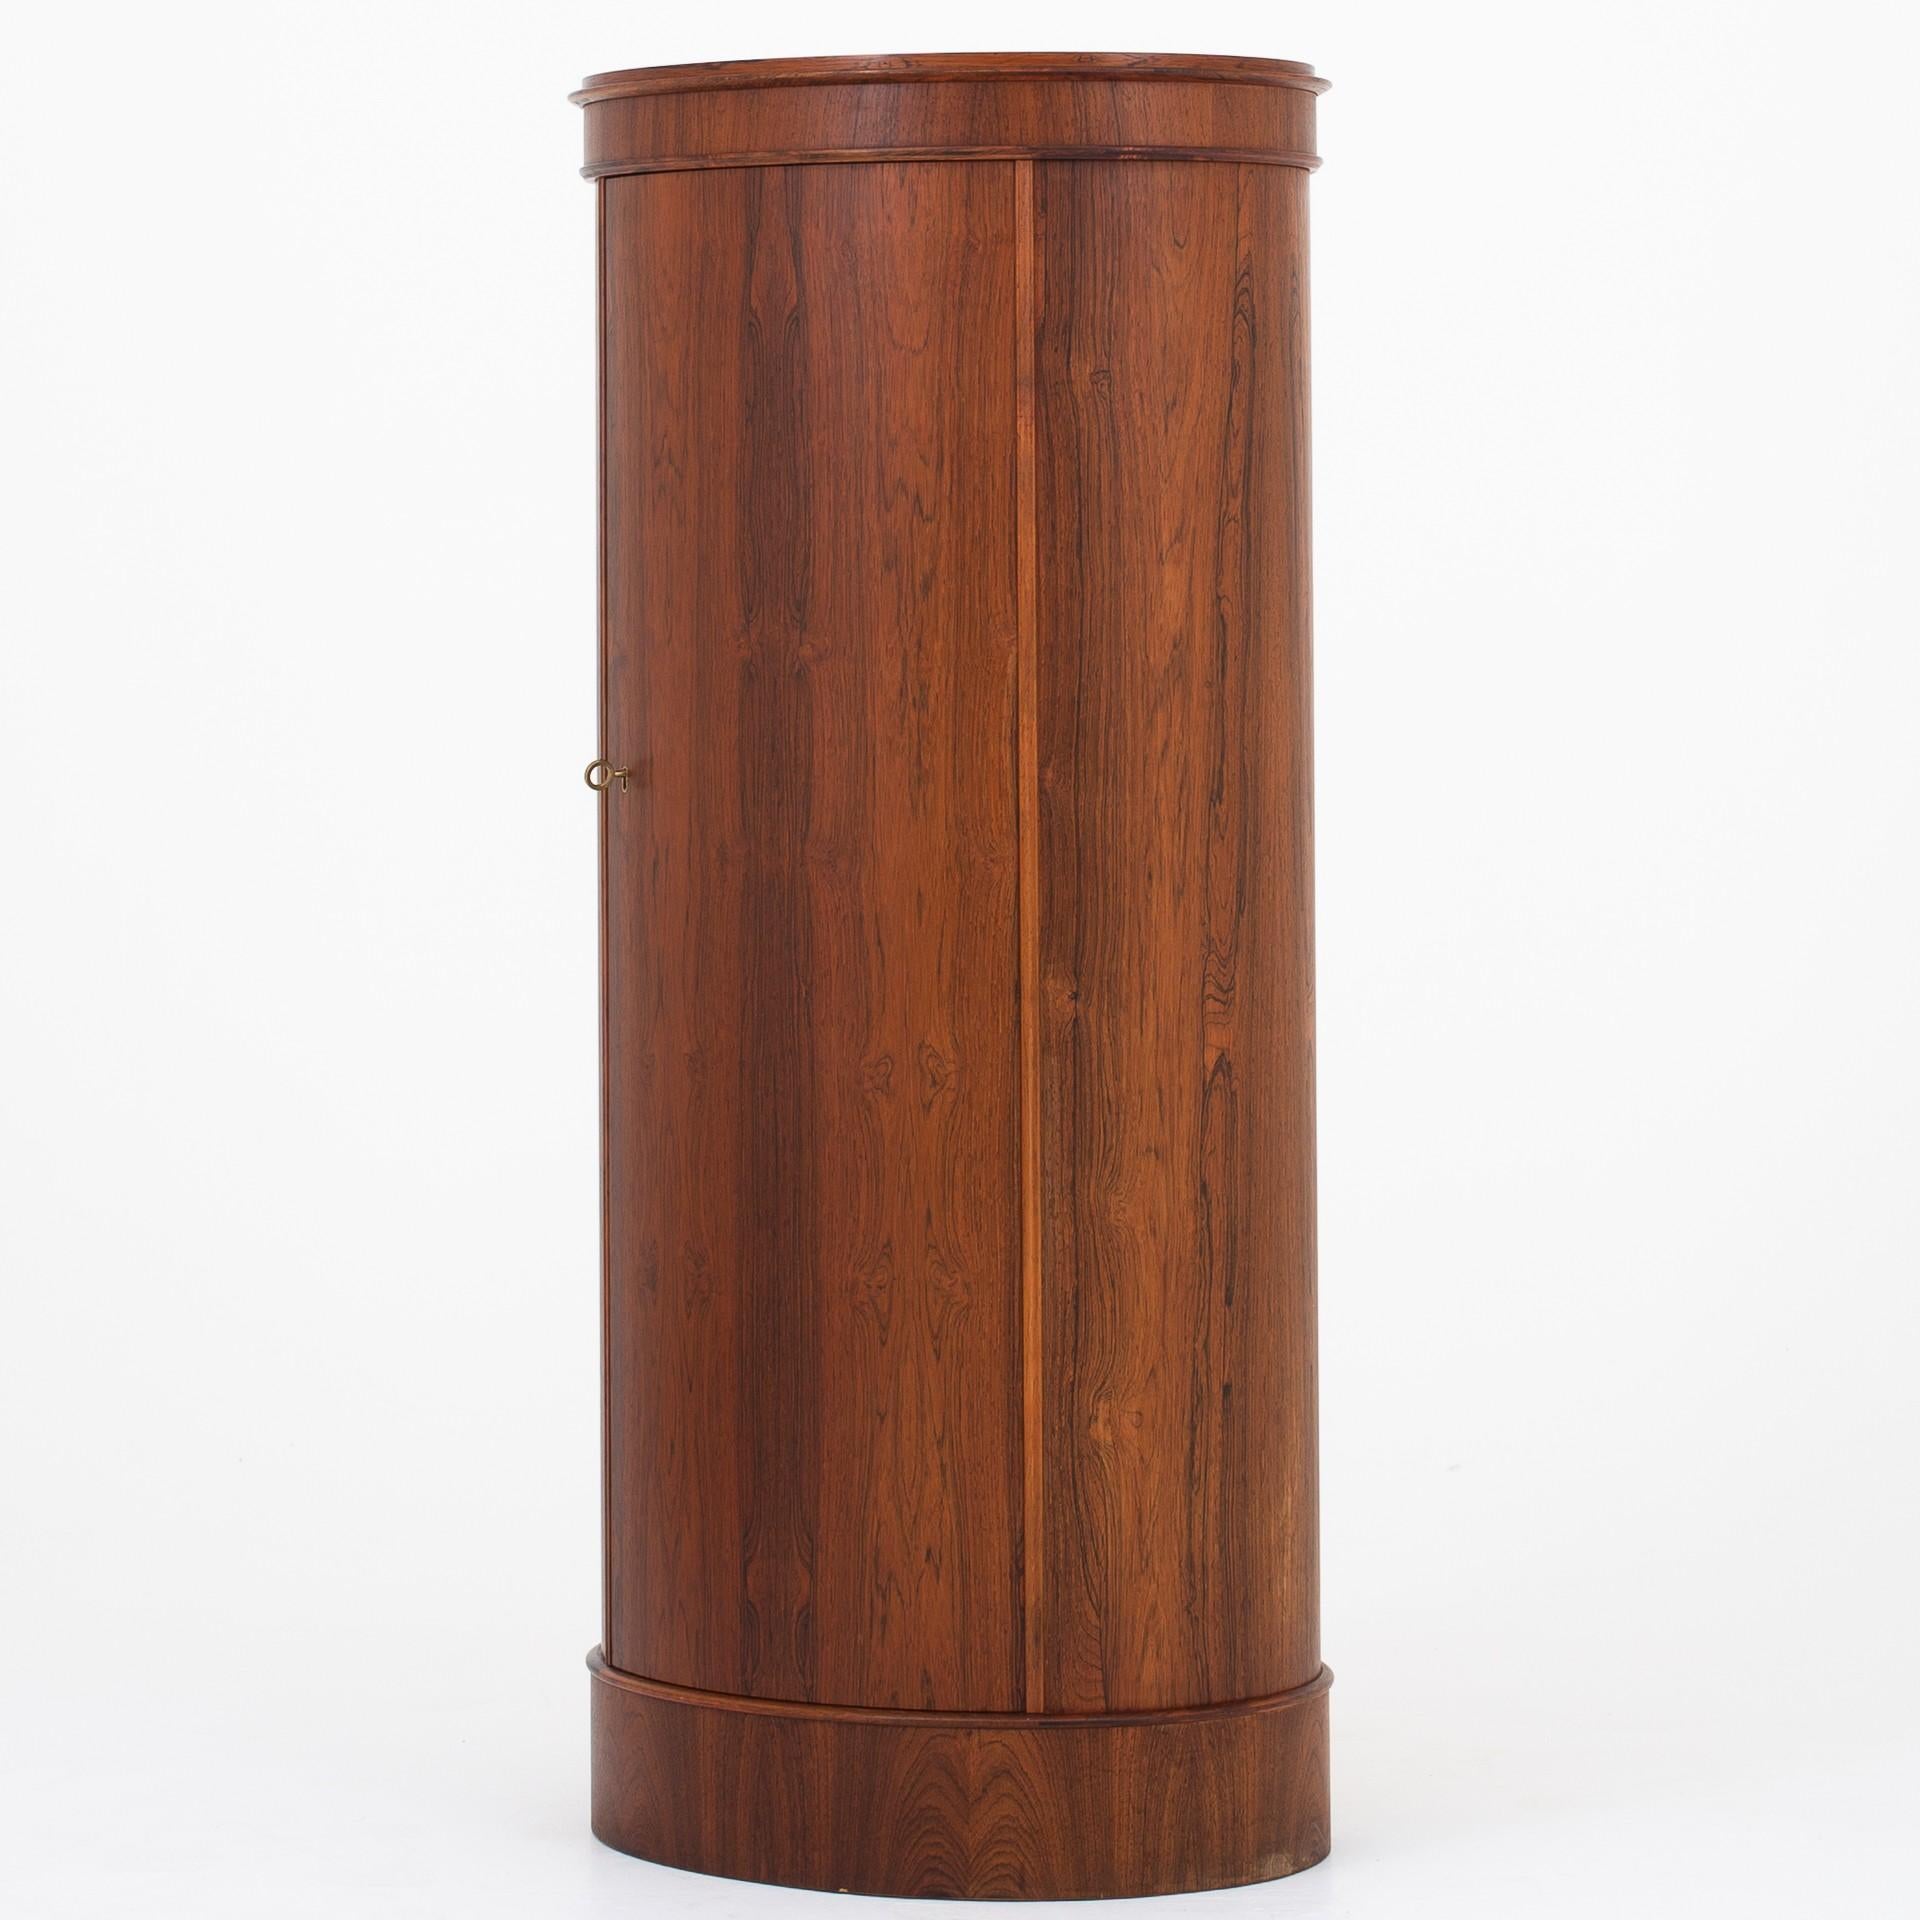 Pedestal cabinet in rosewood. Model 205. Maker Bornholms Møbelfabrik.